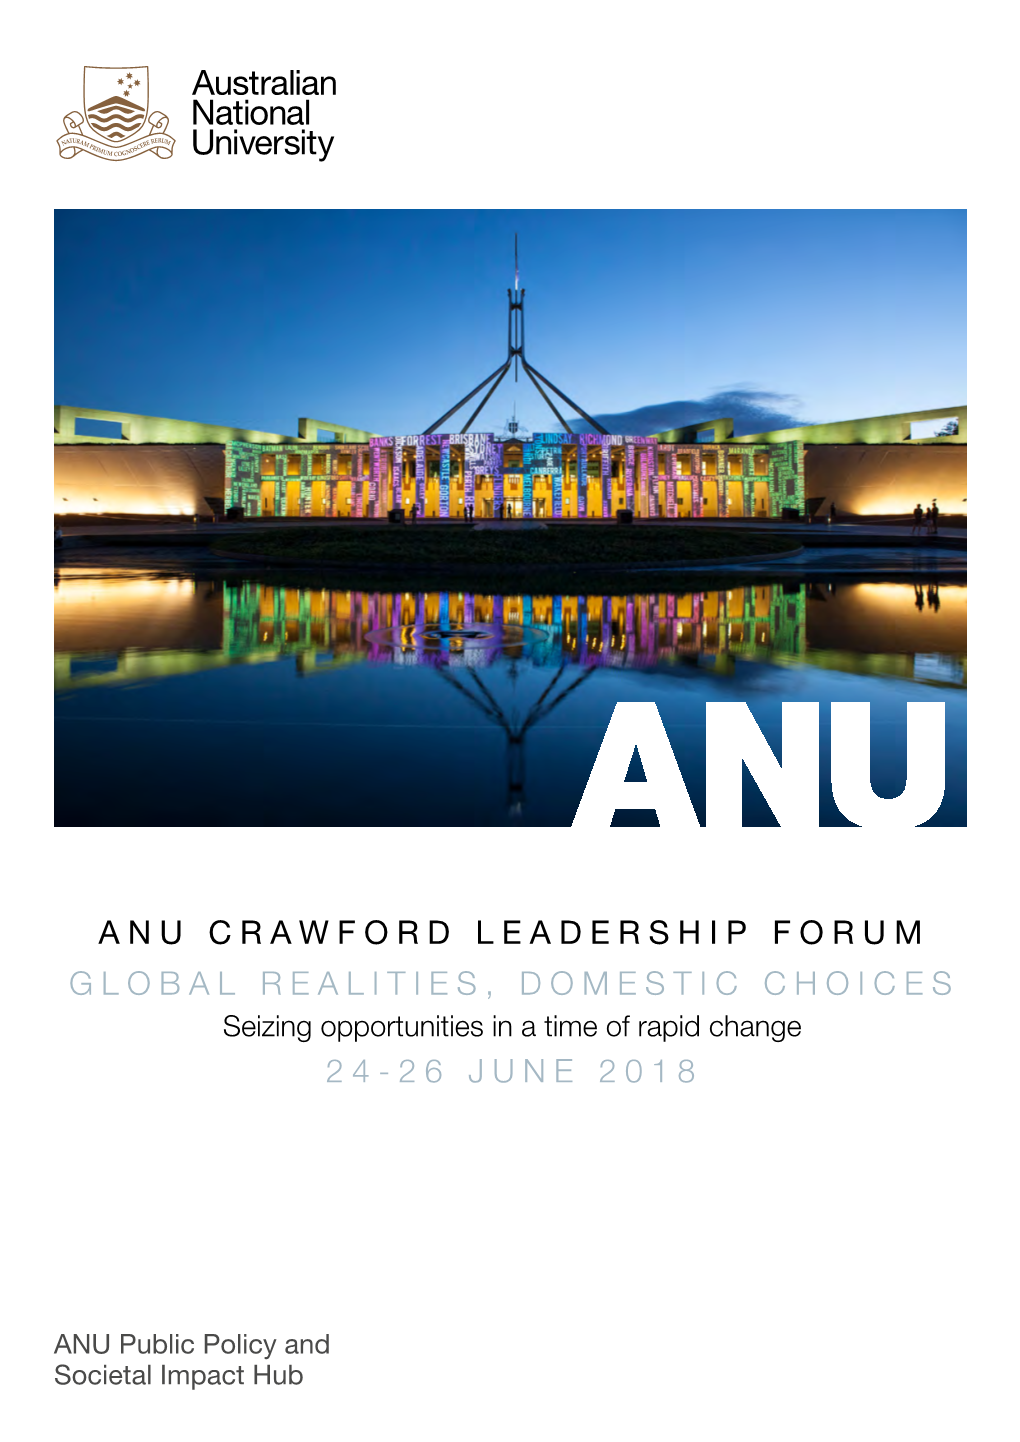 Anu Crawford Leadership Forum Global Realities, Domestic Choices 24-26 June 2018